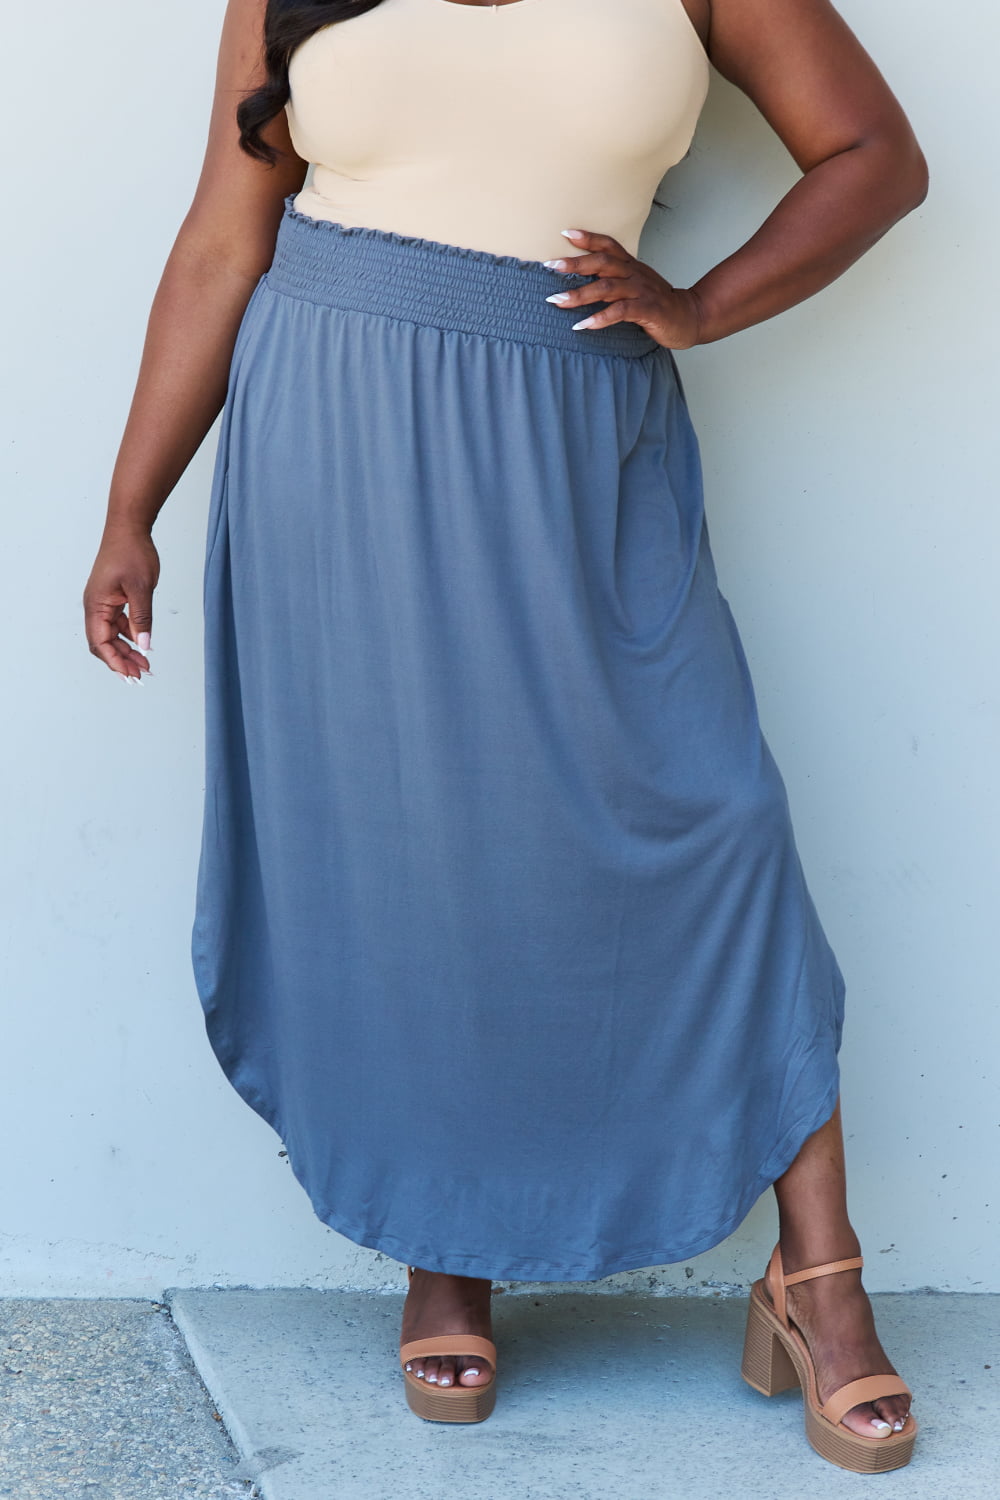 Flirty Fling High Waist Scoop Hem Maxi Skirt-Dusty Blue Dusty Blue Maxi Skirts by Vim&Vigor | Vim&Vigor Boutique